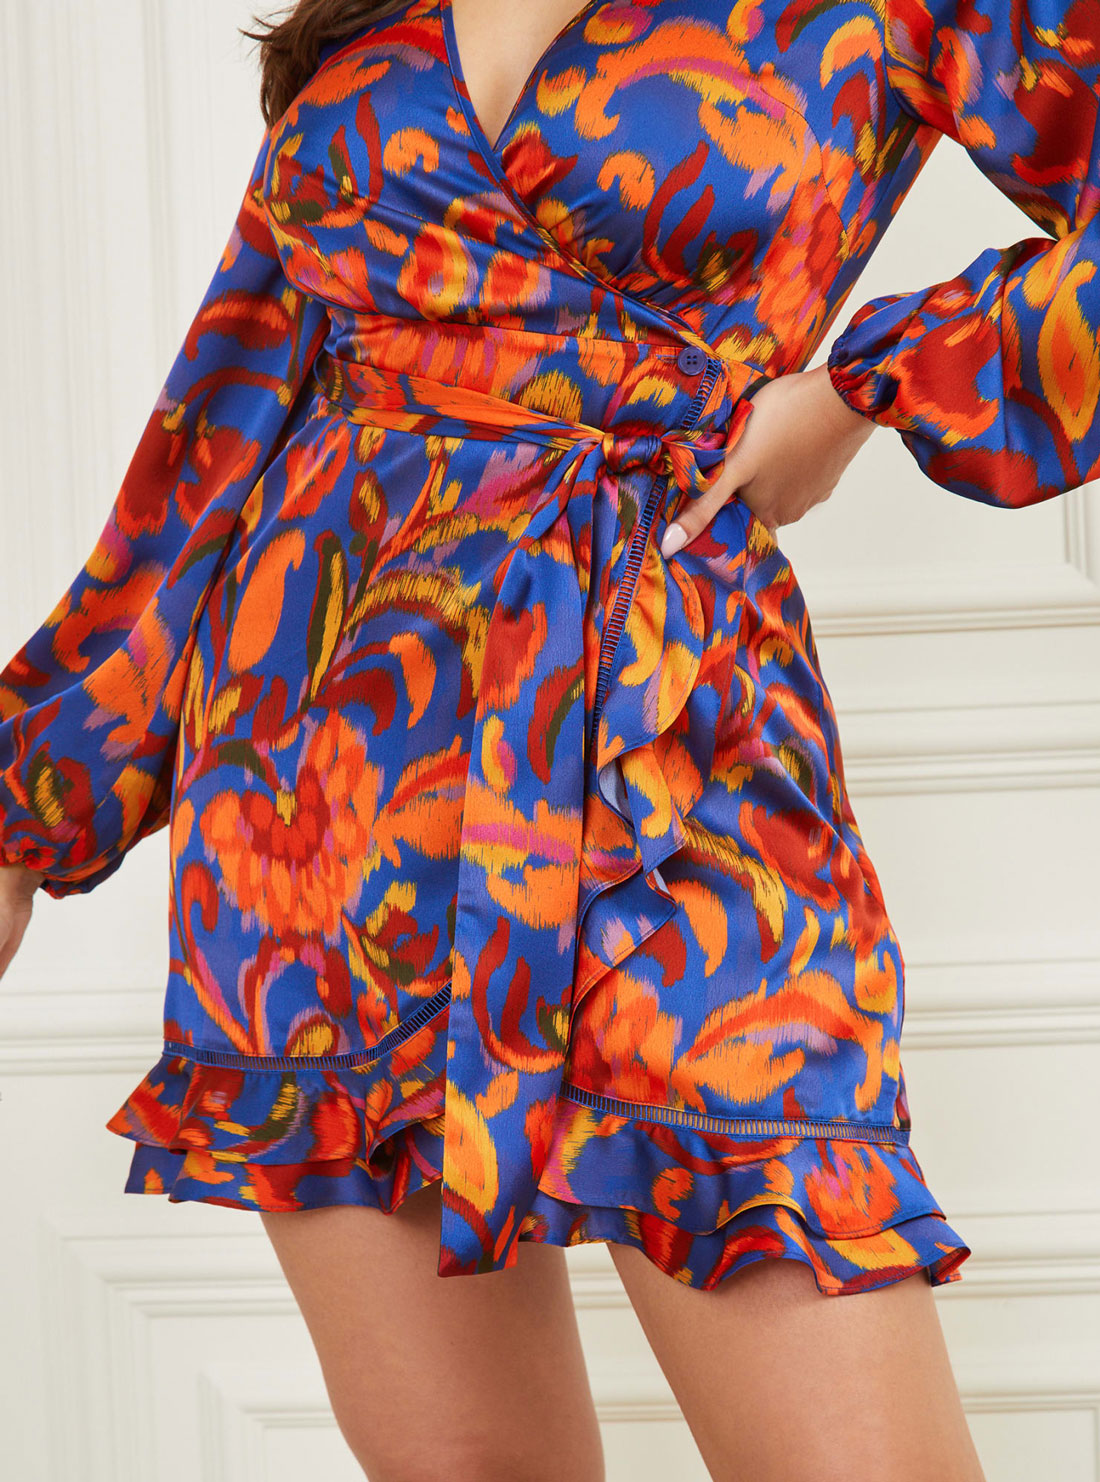 Marciano Betty Blue Wrap Dress | GUESS Women's Apparel | detail bottom view